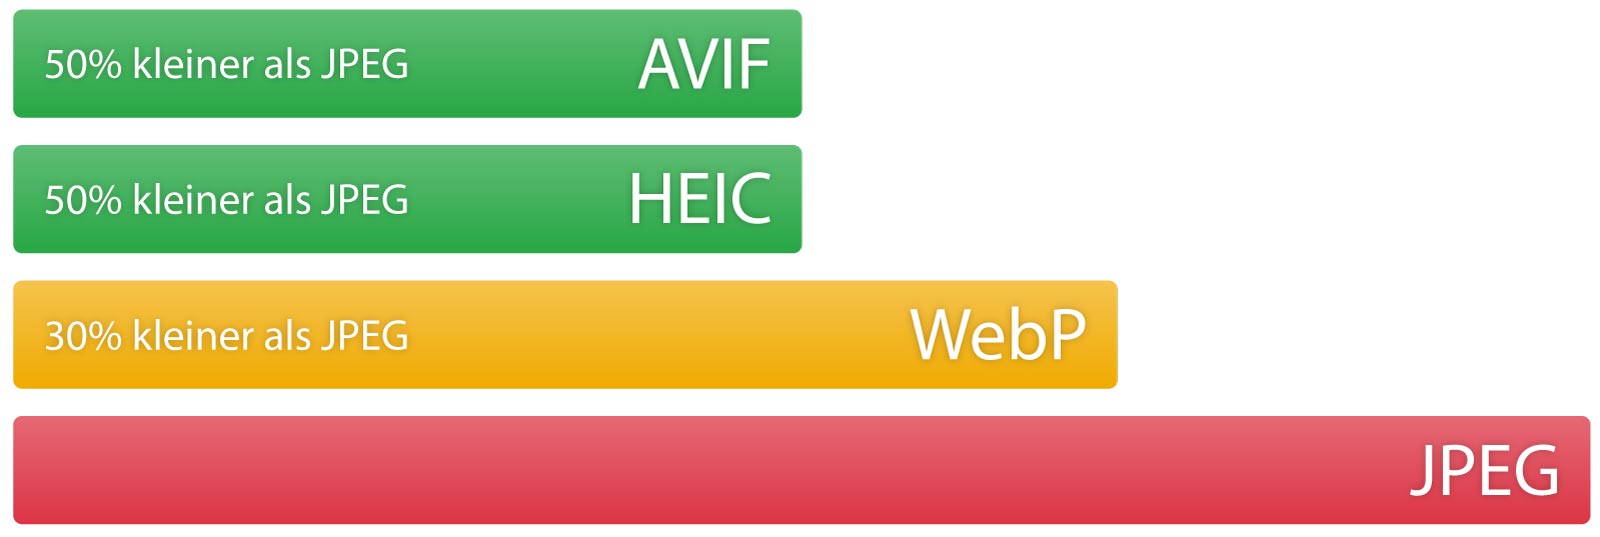 AVIF HEIC WebP JPEG Comparison